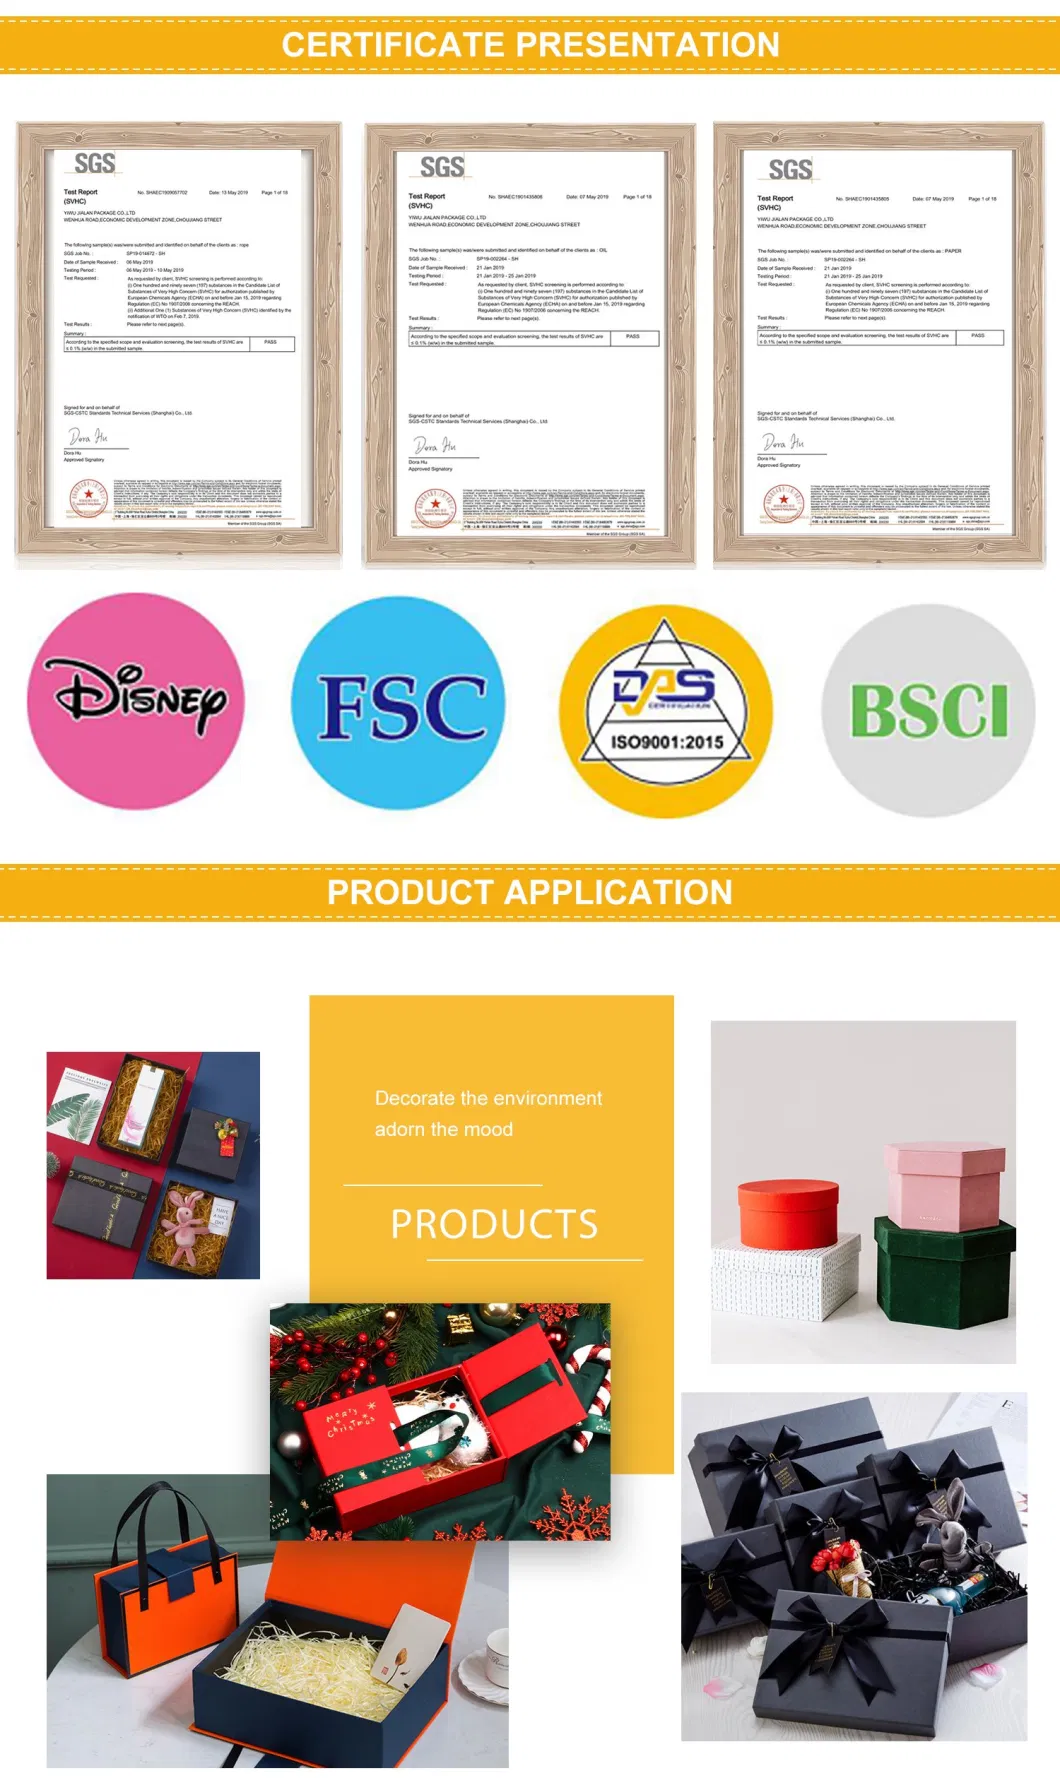 Yiwu Direct Custom Paper Gift Box Child Resistant Drawer Box Wholesale Box Packaging